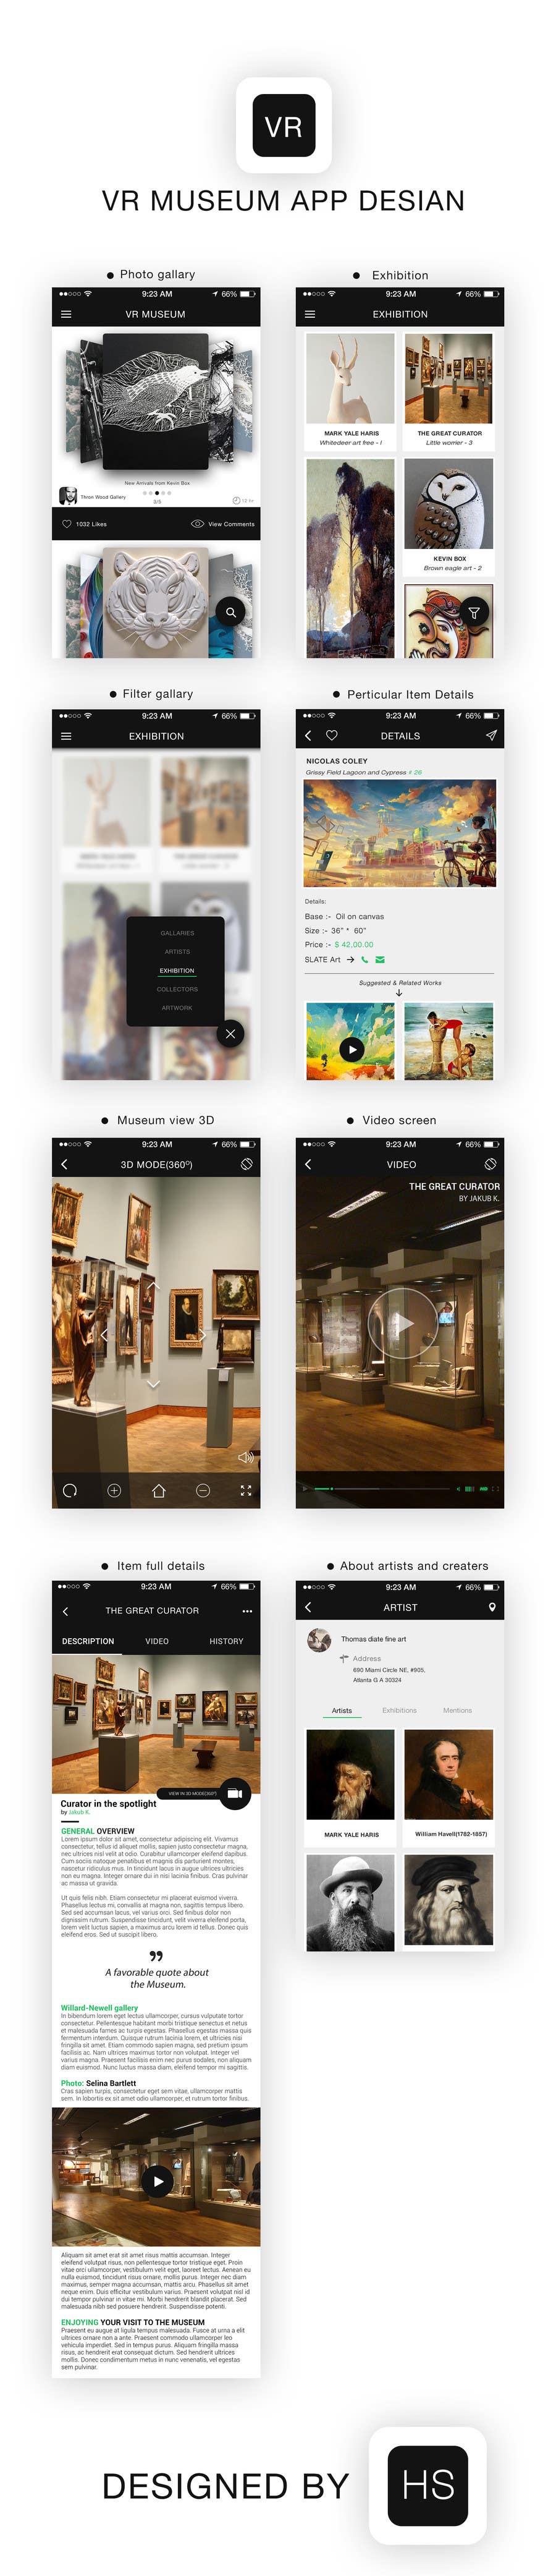 Zgłoszenie konkursowe o numerze #11 do konkursu o nazwie                                                 App Design - VR Museum Tour [Mobile] + Future Contract
                                            